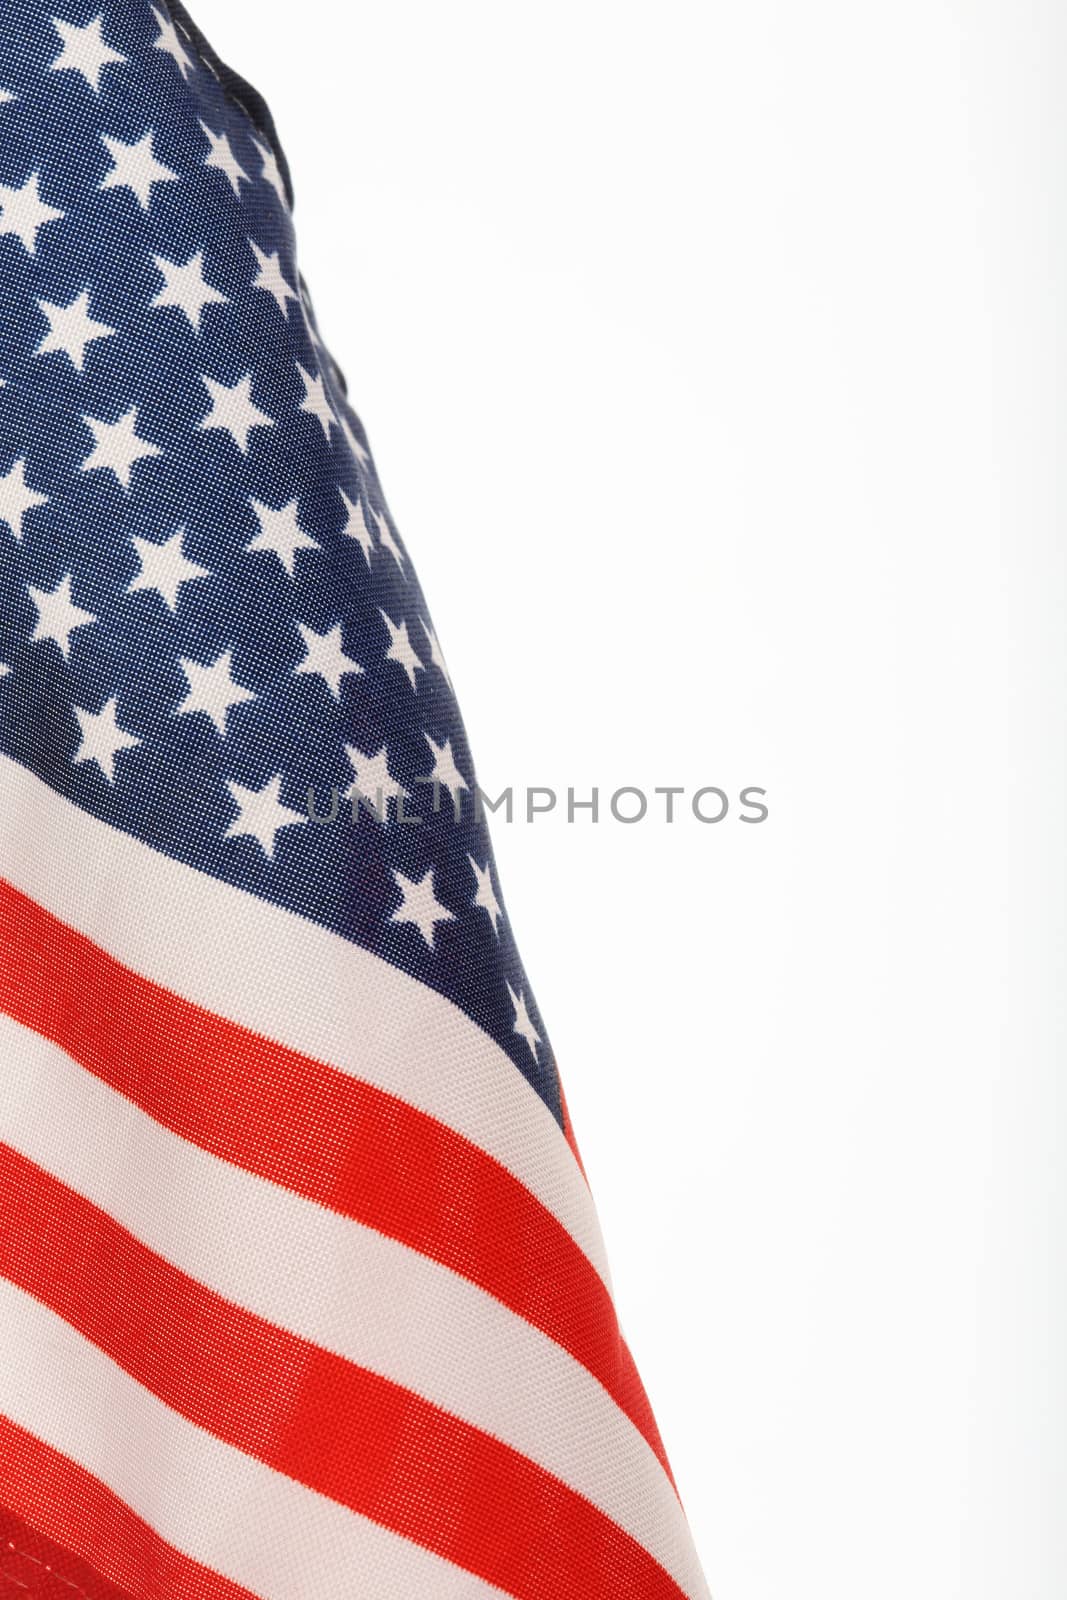 Flag of USA over white background